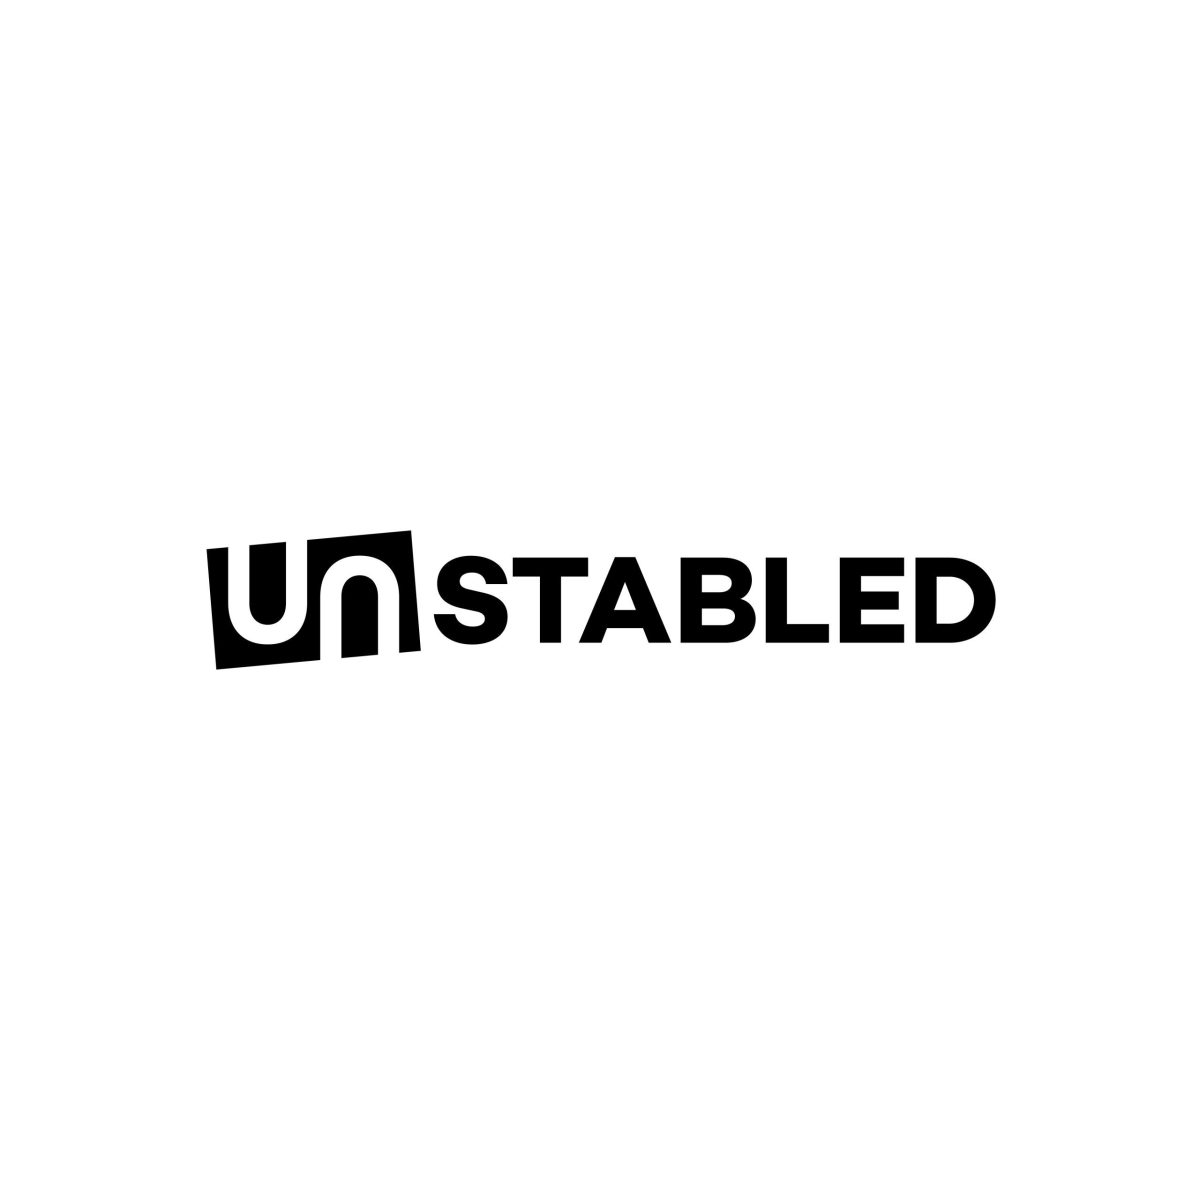 Logo__Unstabled__horz__mono__black